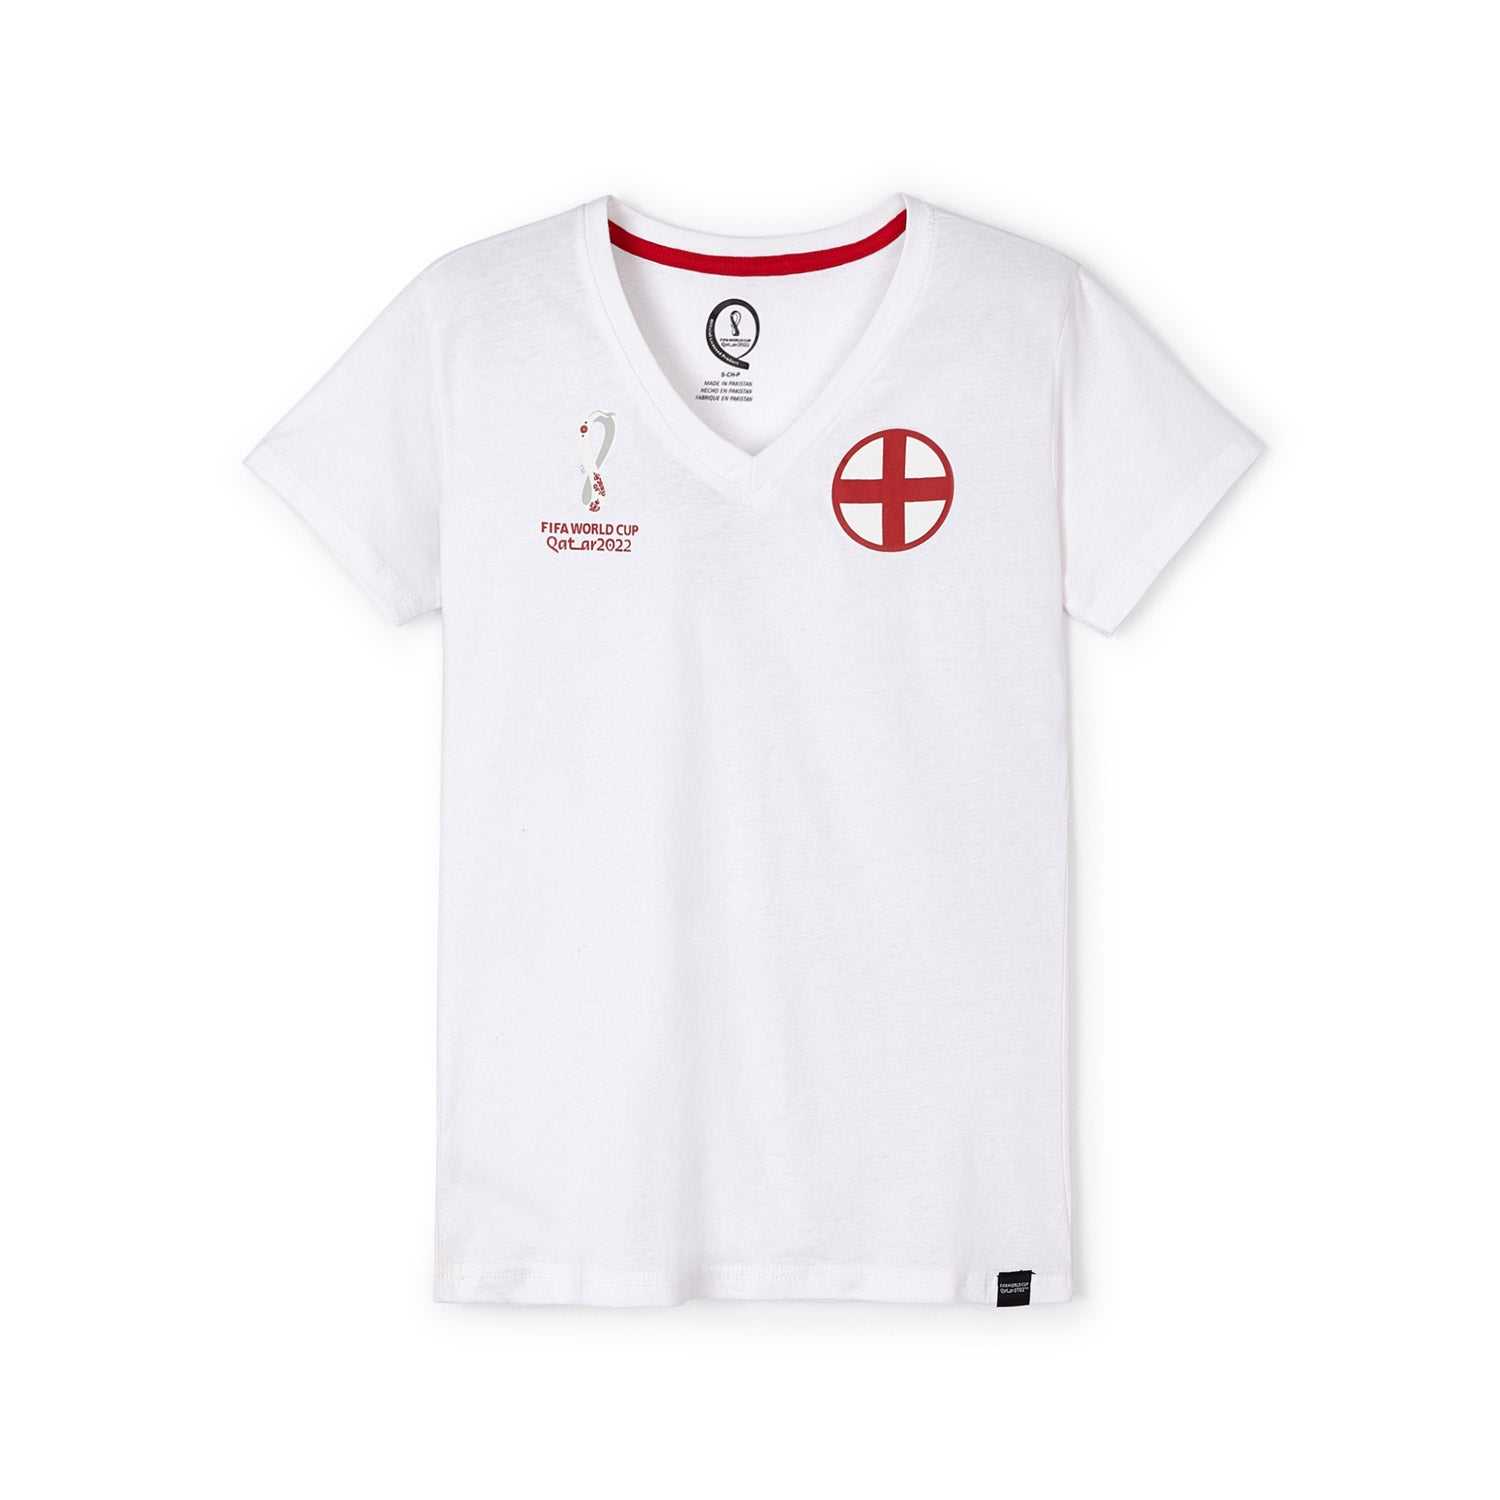 2022 World Cup England White T-Shirt - Women's